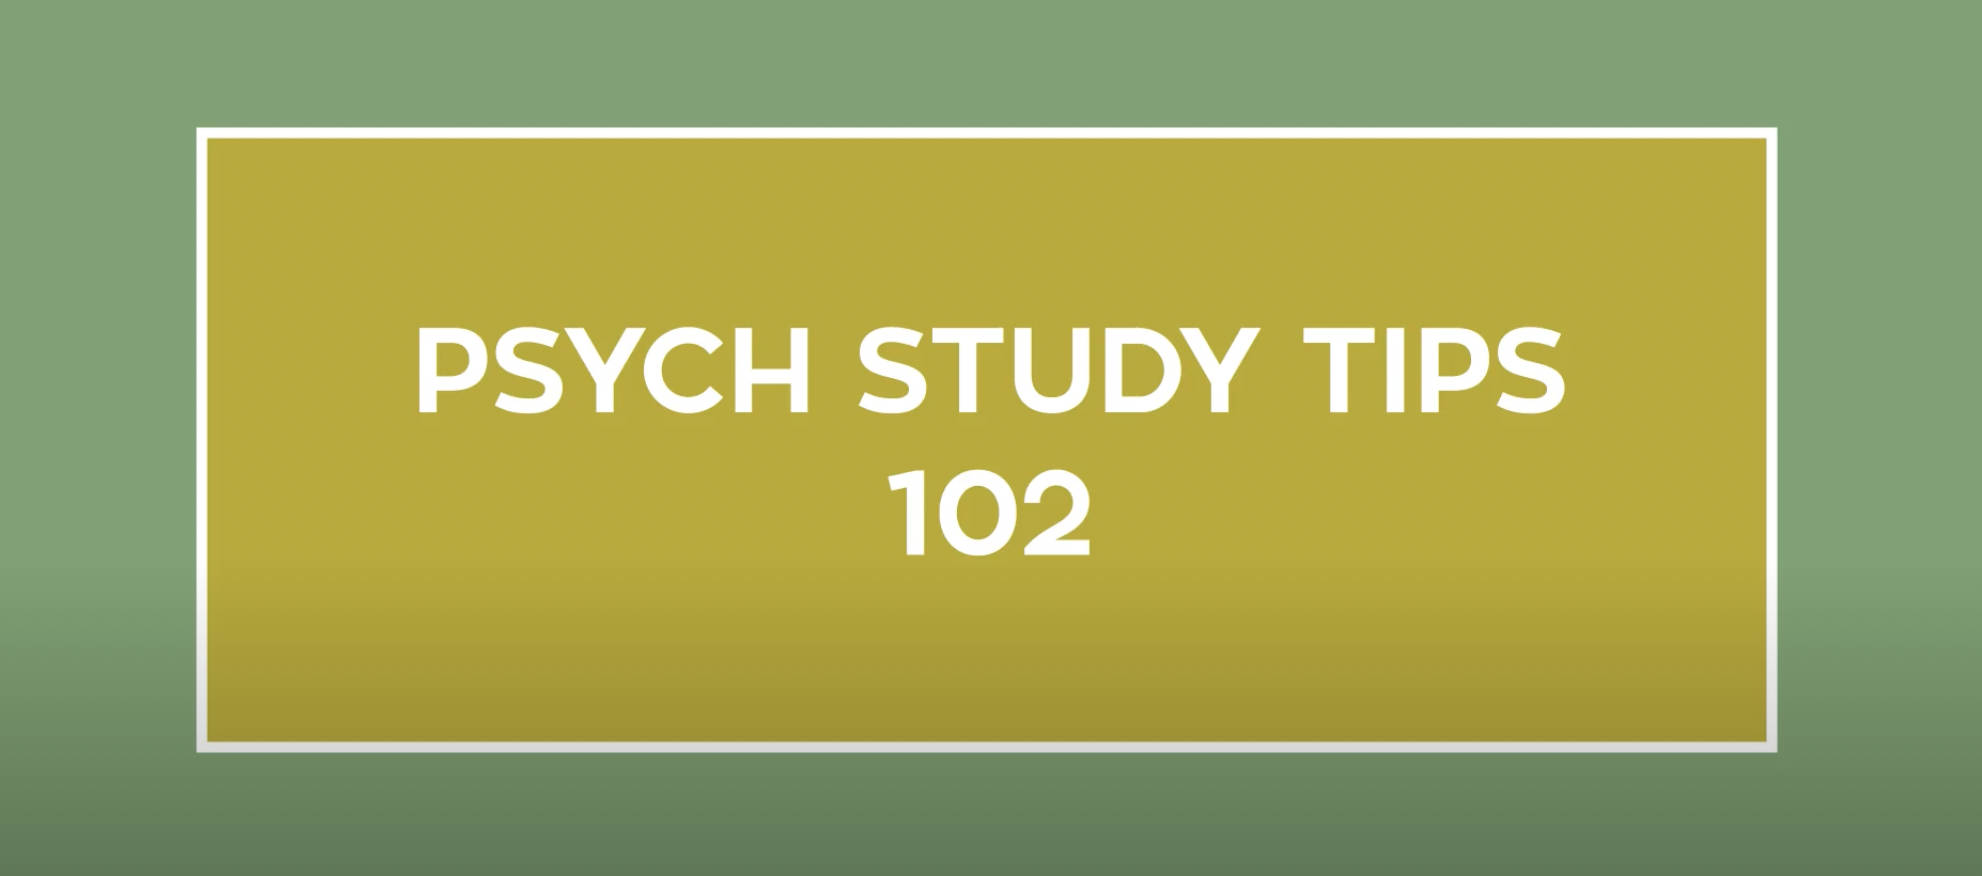 Study Tips 102 video